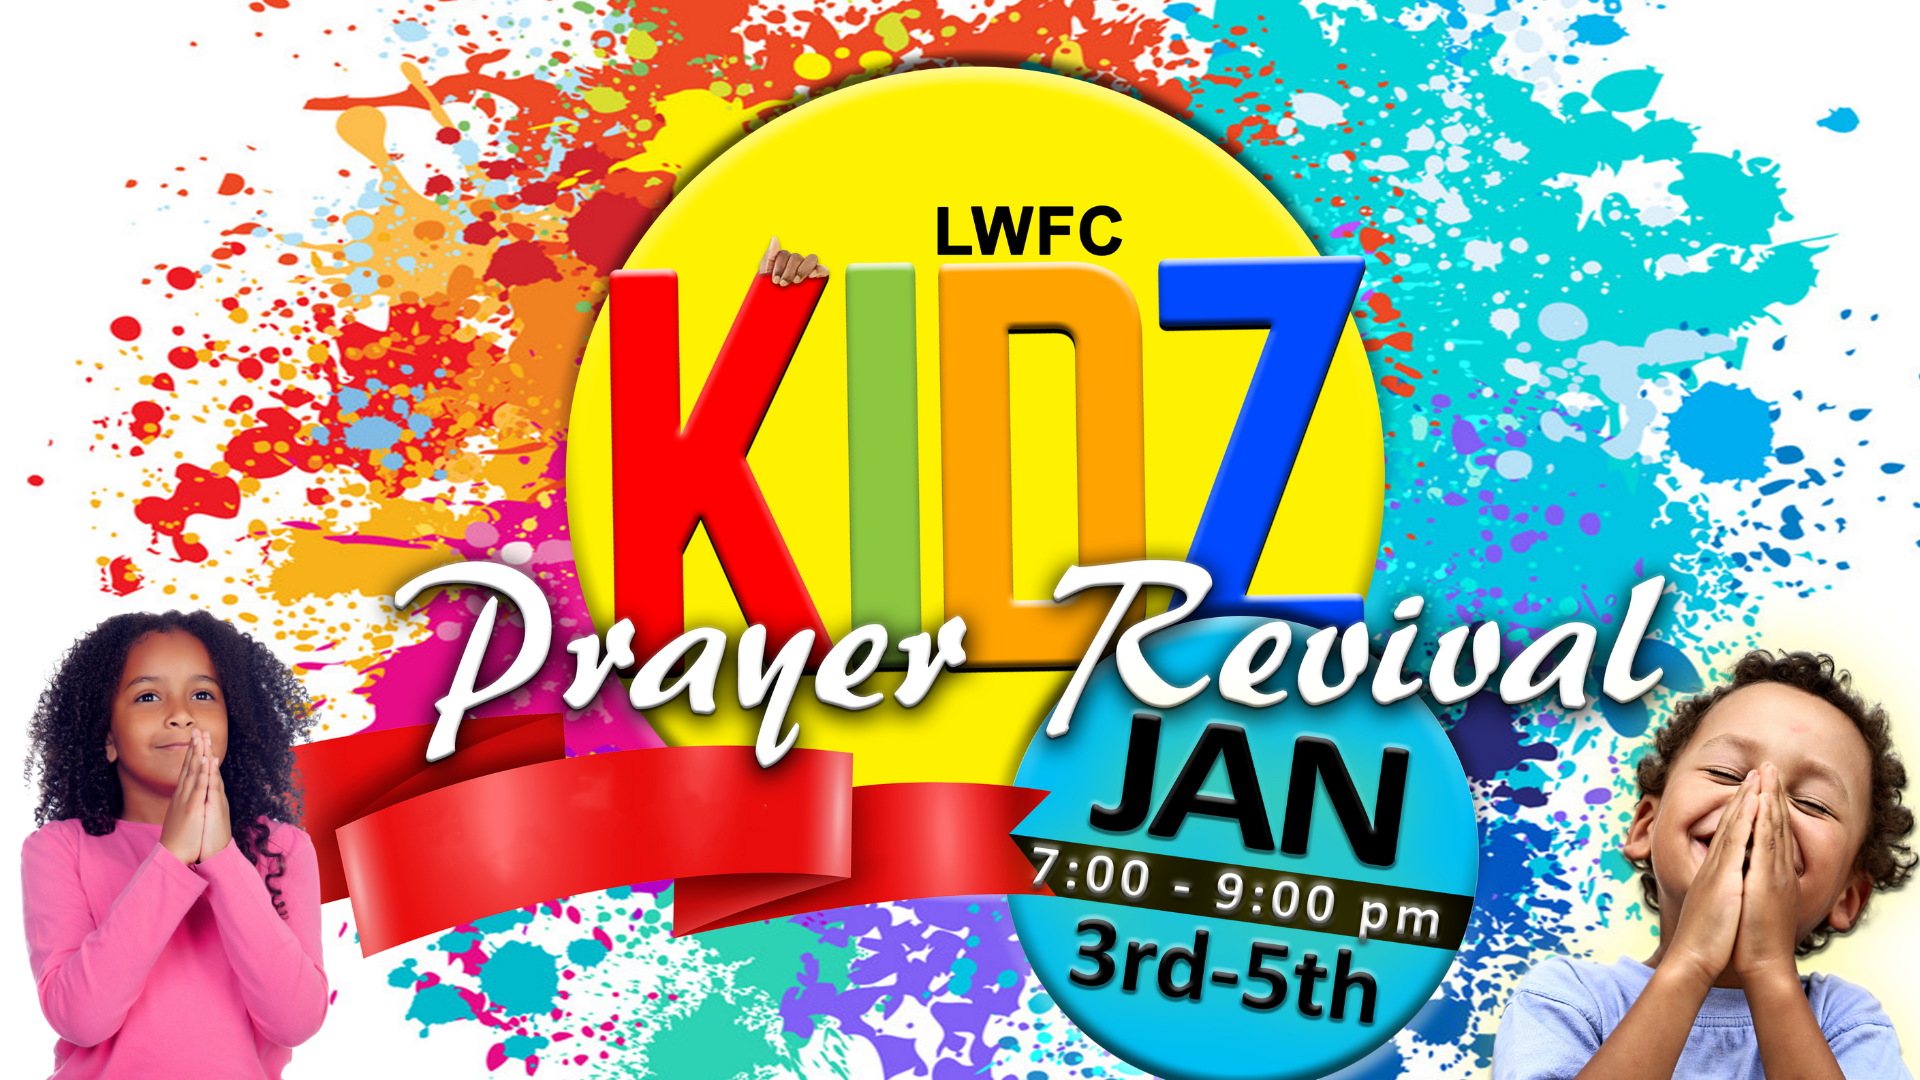 LWFC Kidz Prayer Revival head image